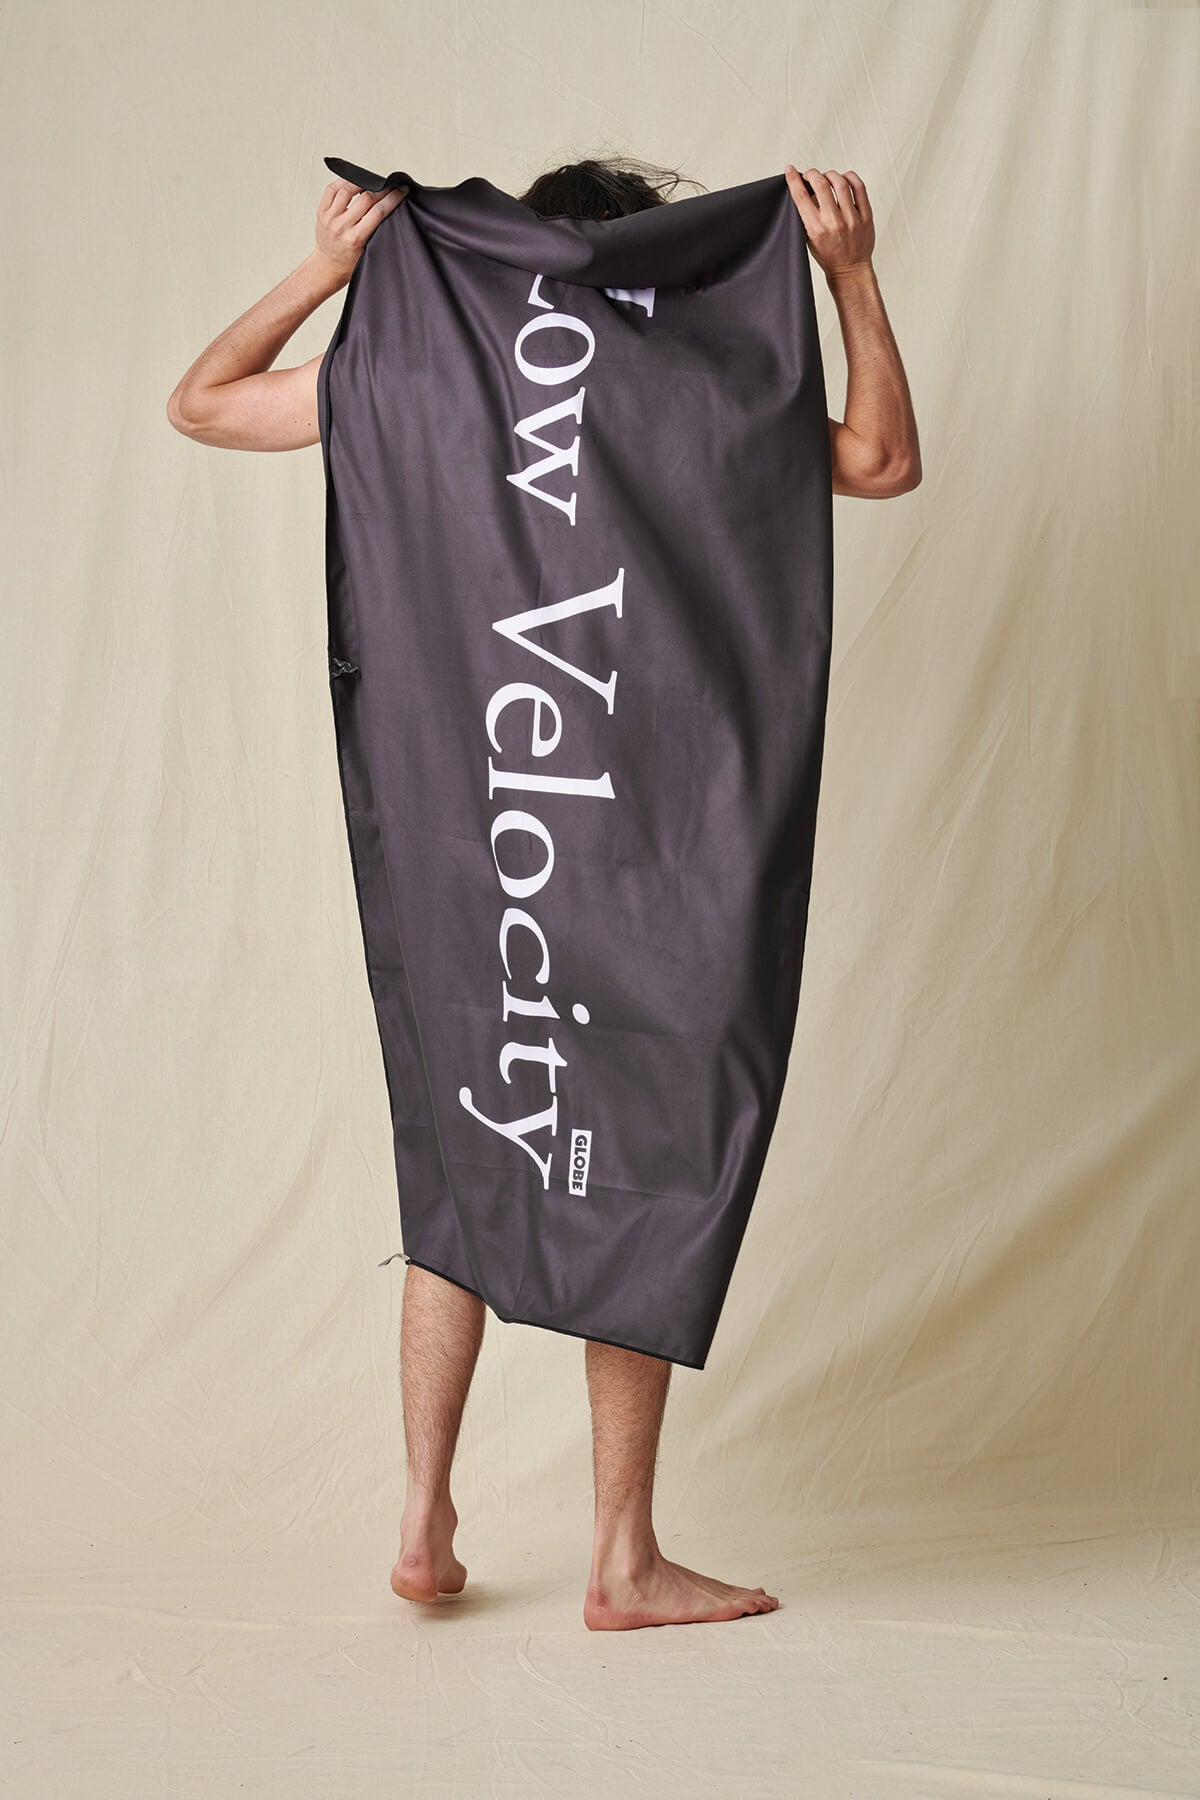 lv travel towel black